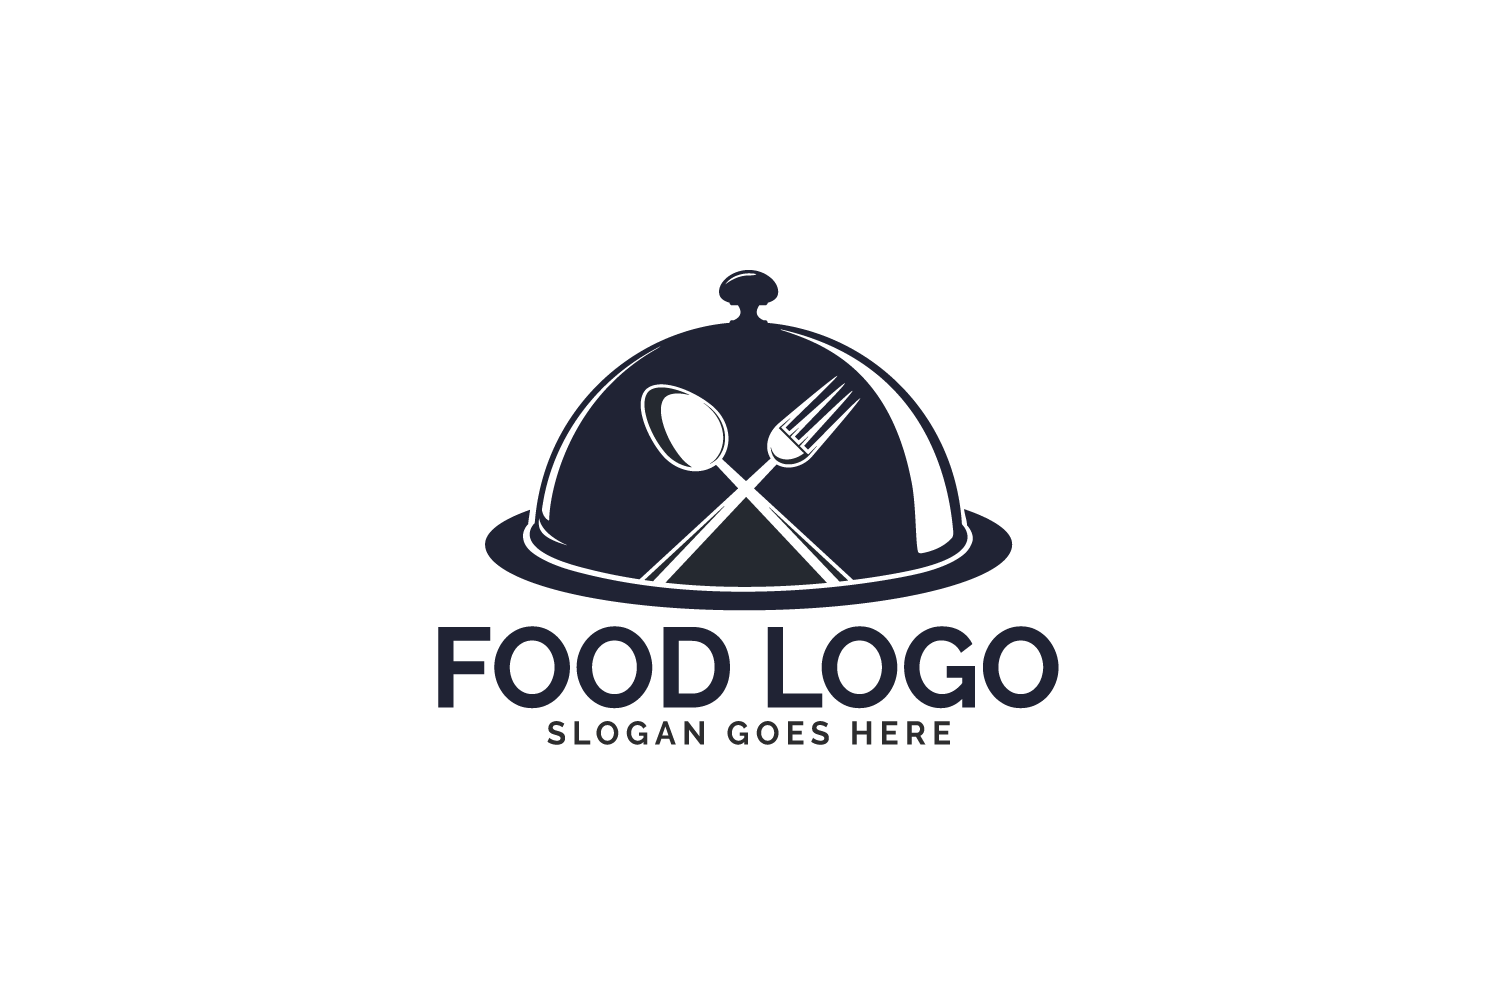 Download Free Food Logo PSD Mockup Template